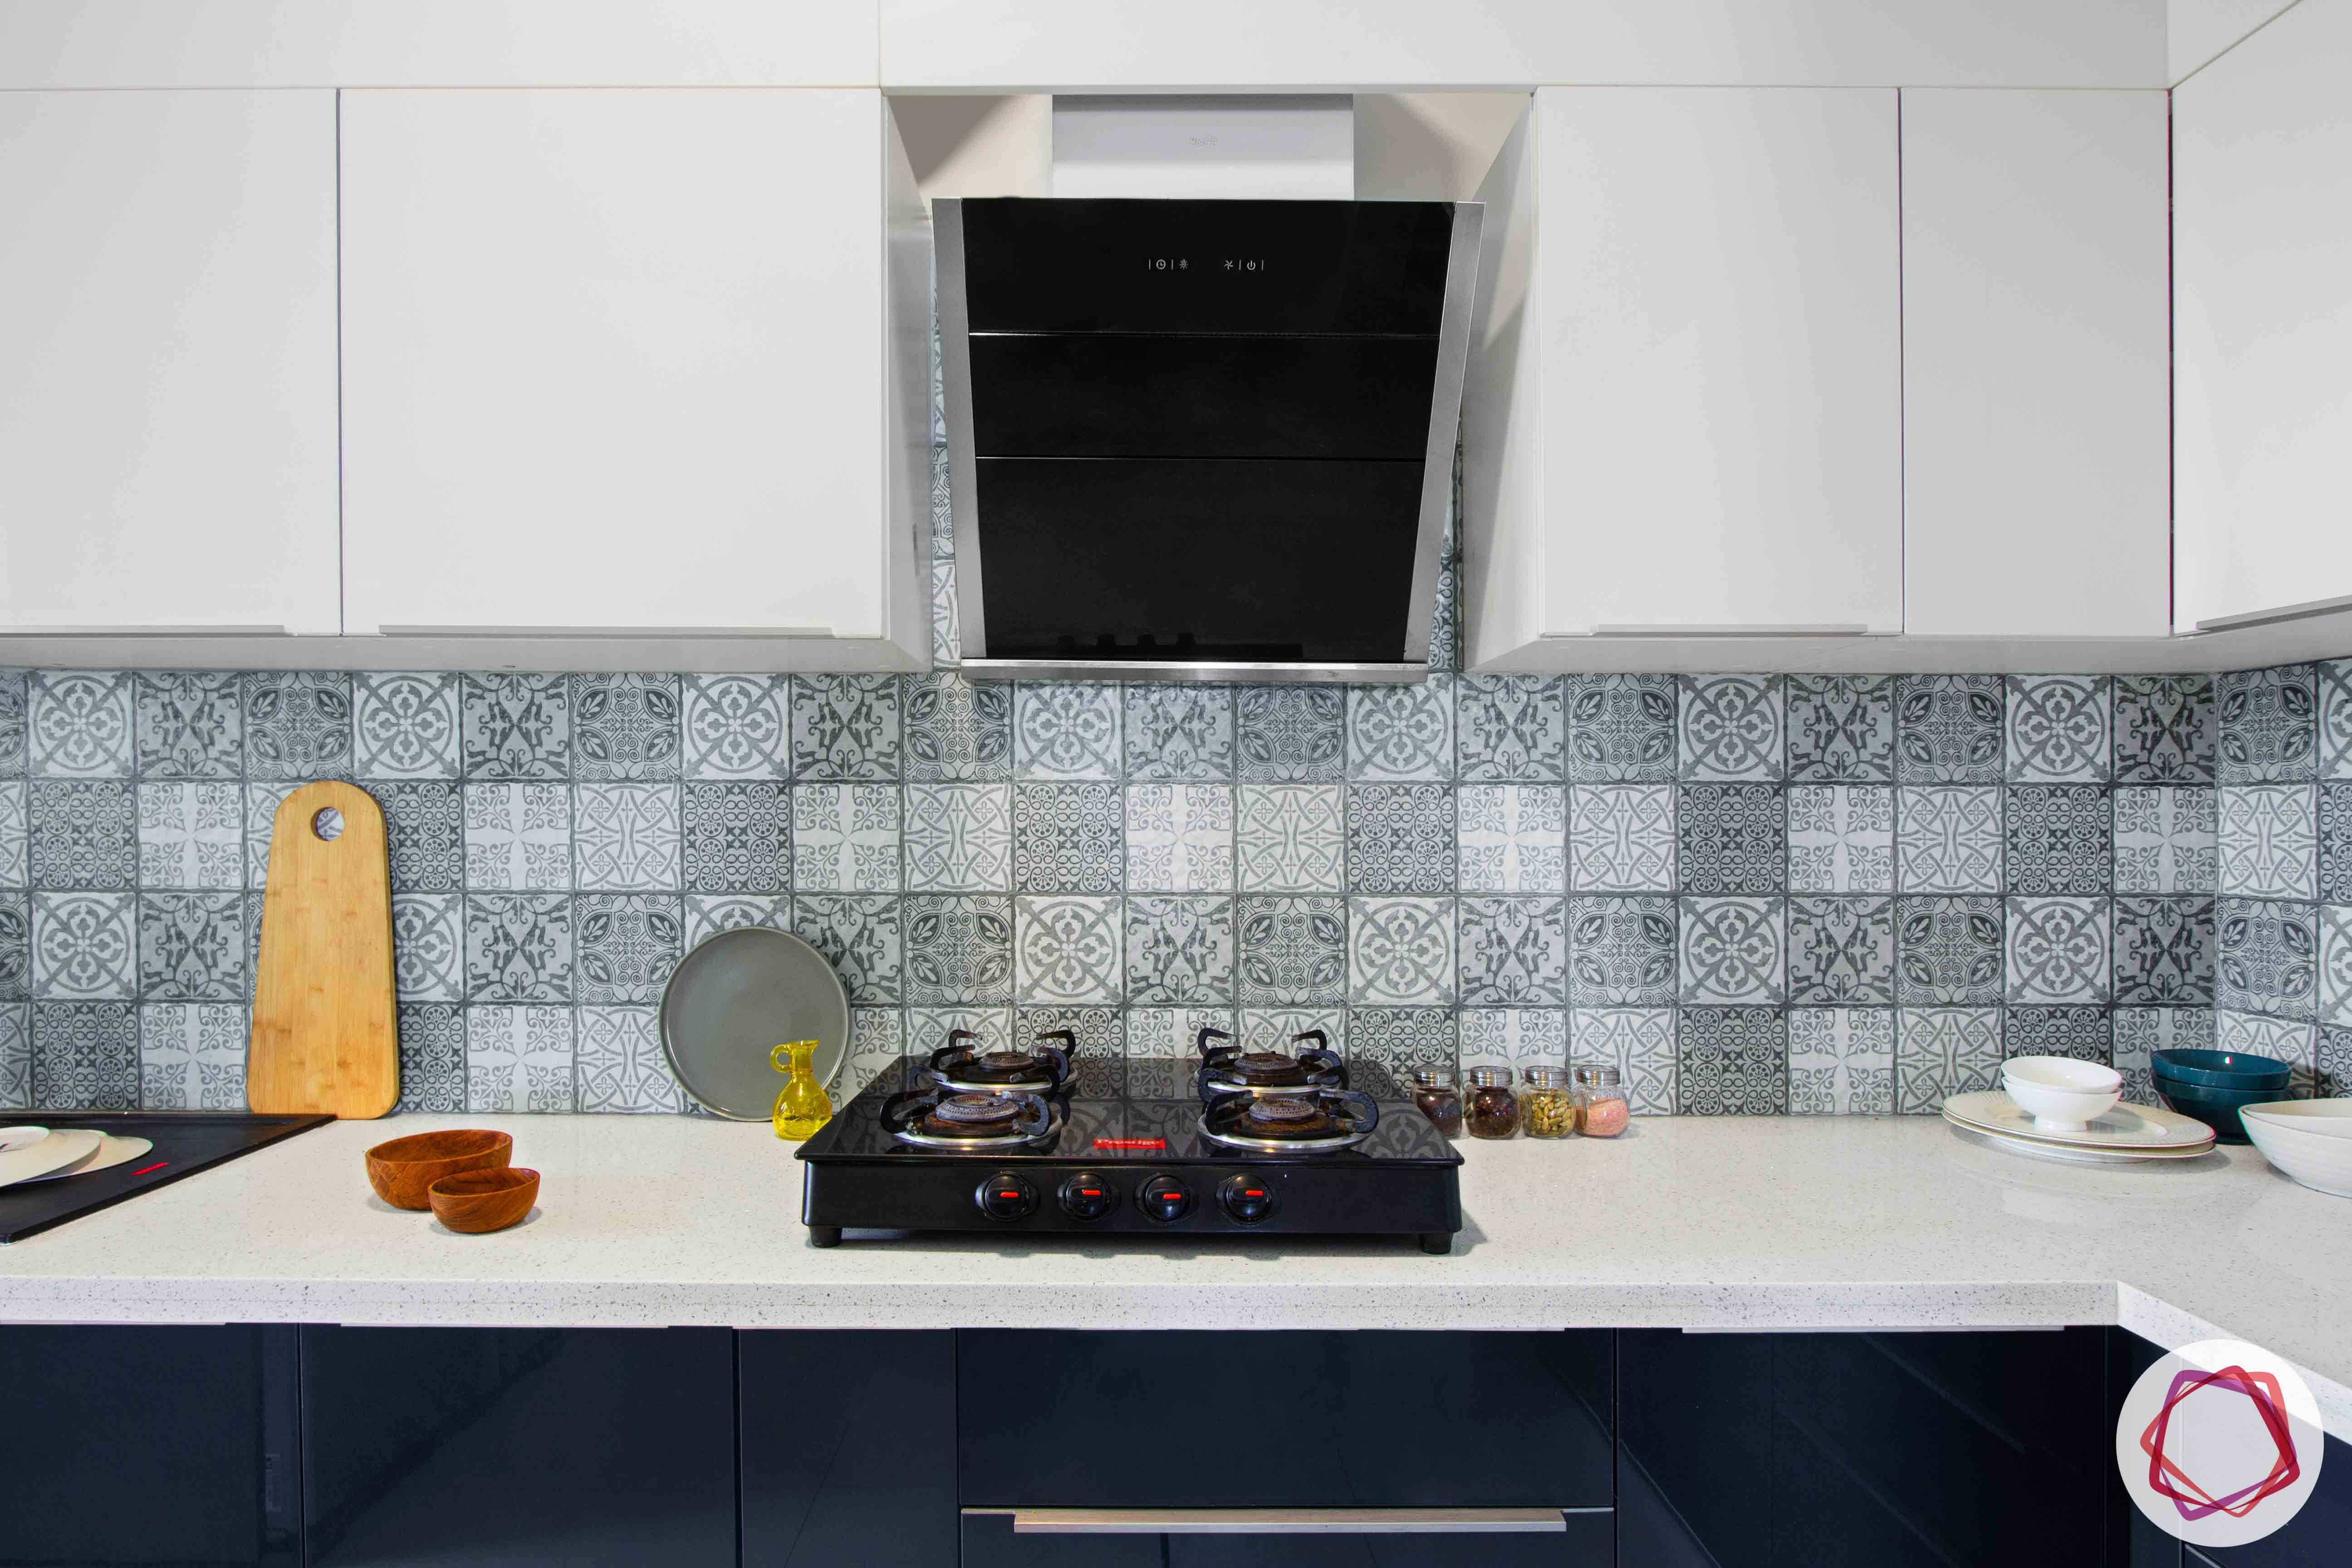 dnr atmosphere-two toned kitchen design-quartz countertop designs